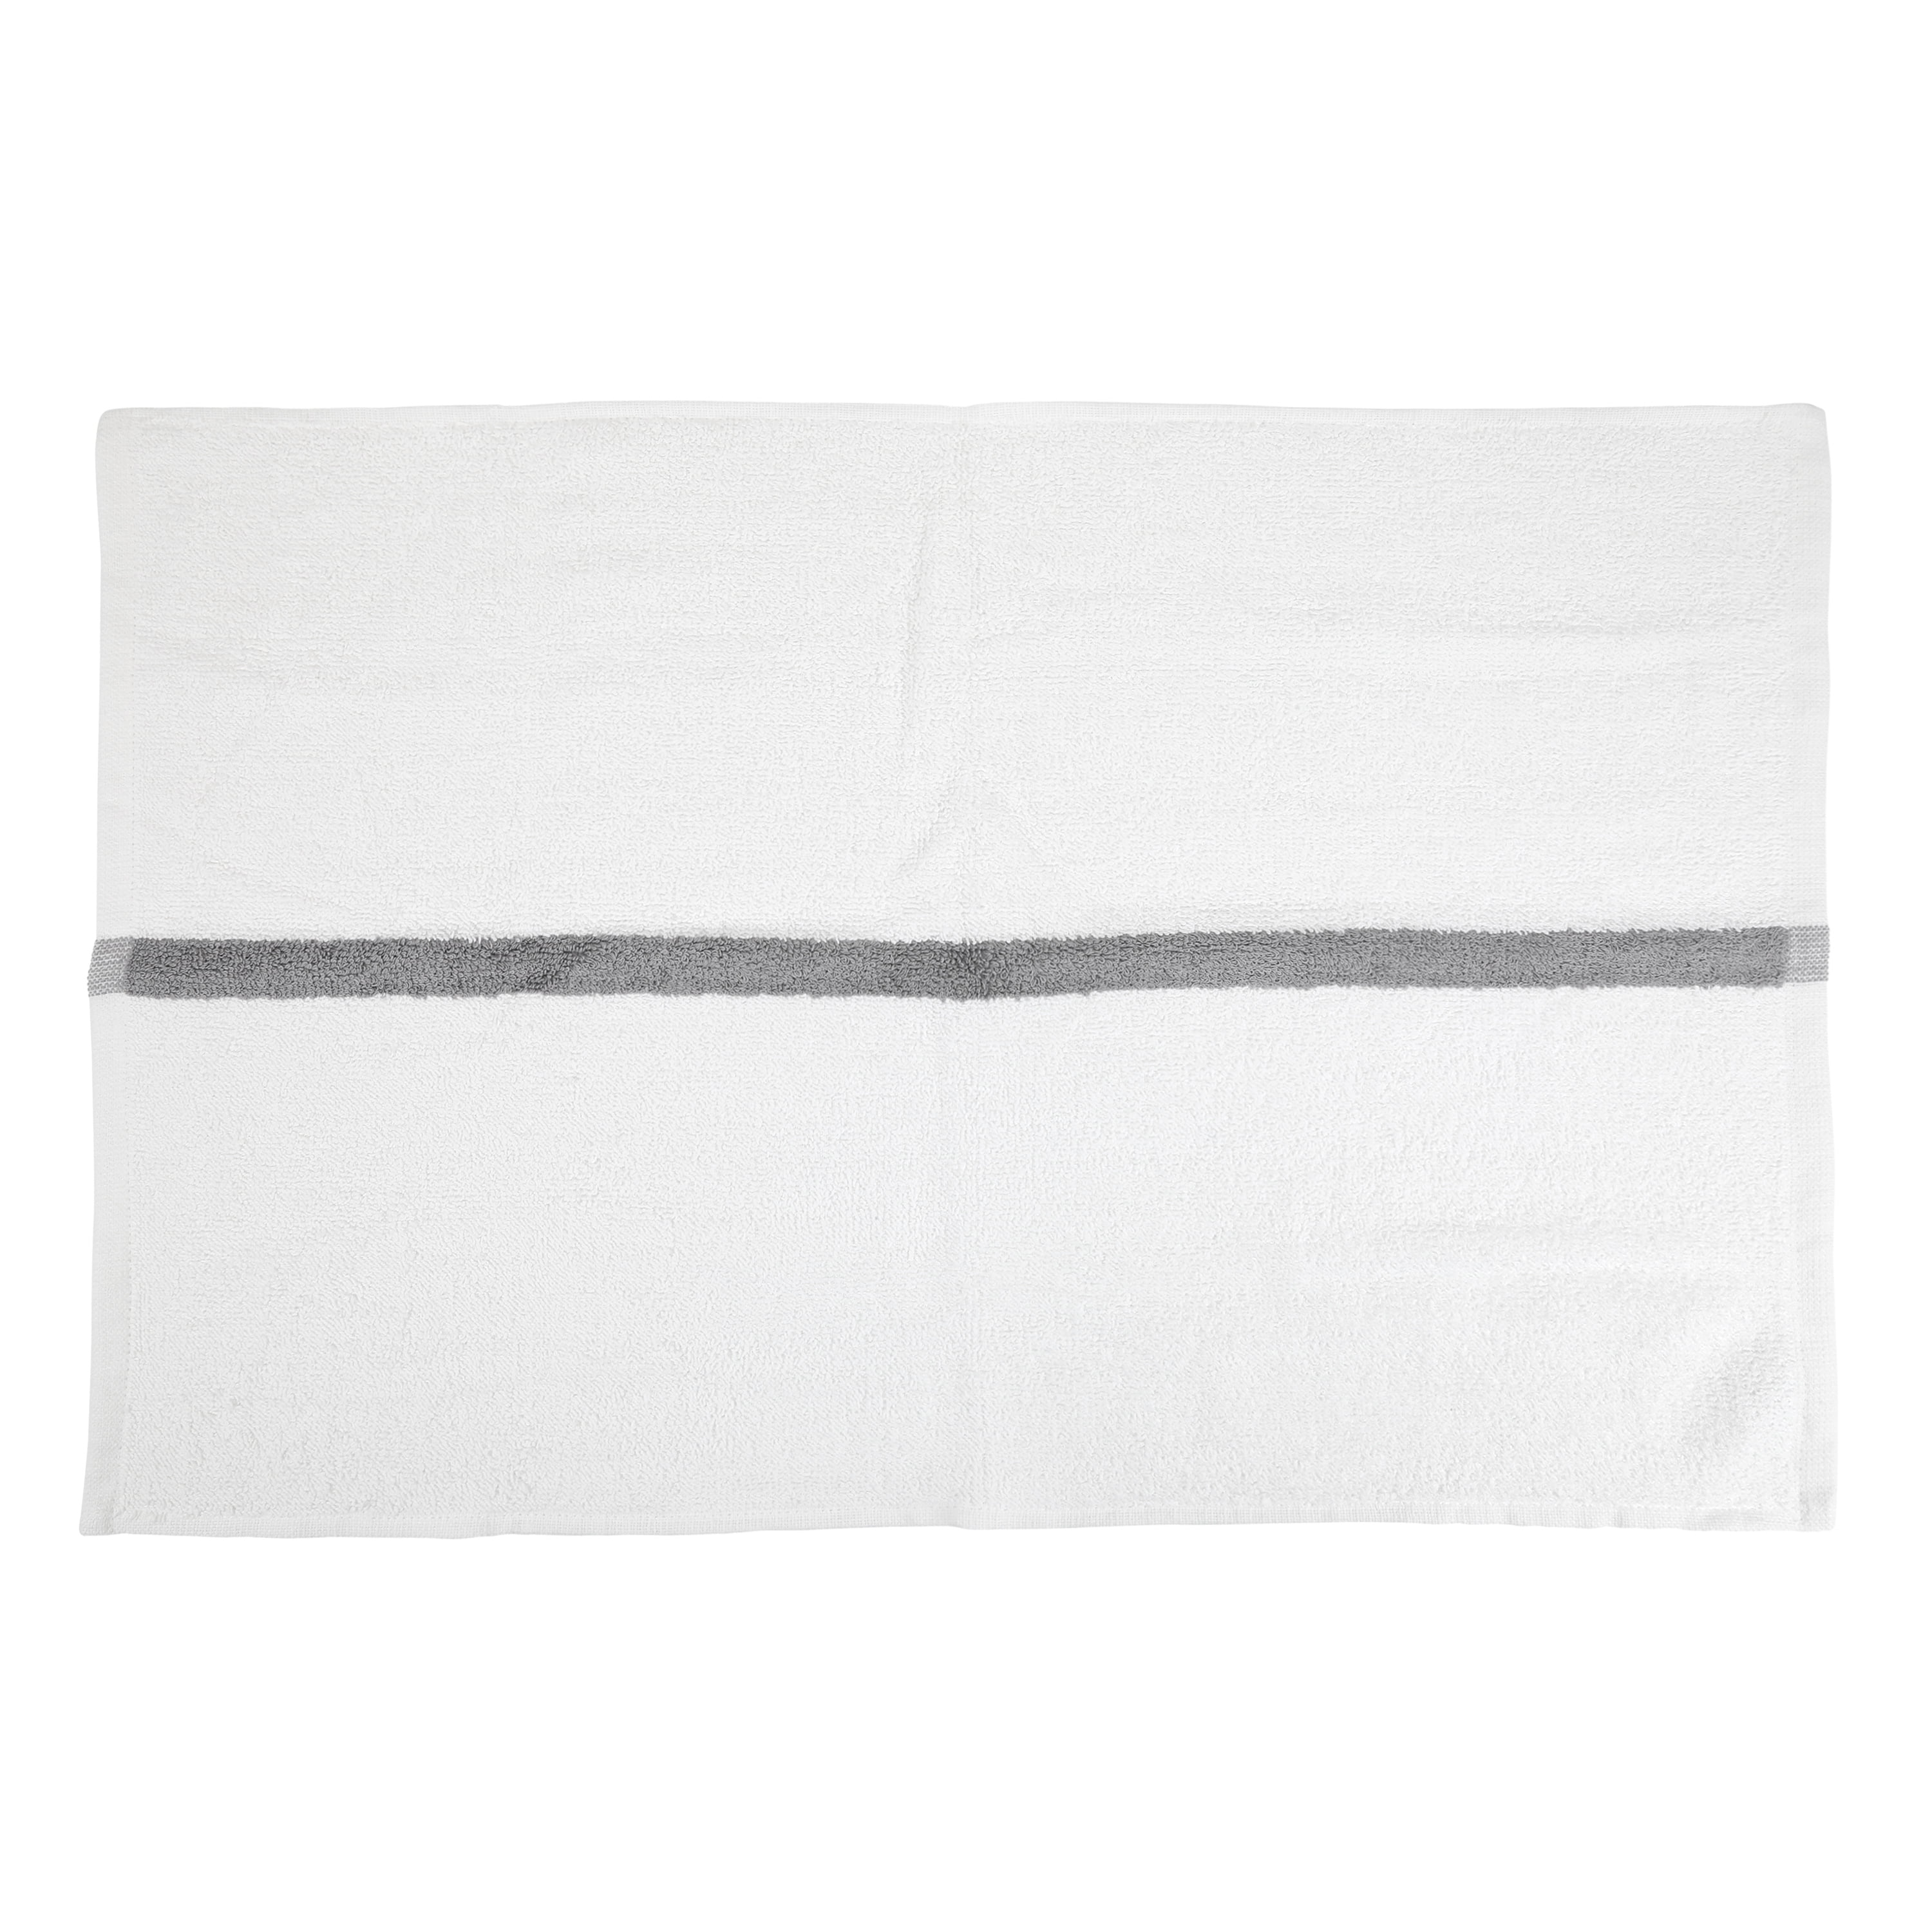 $32 Charisma White Classic Bath Towel Almond Shower Gym Bathroom Hand Towel